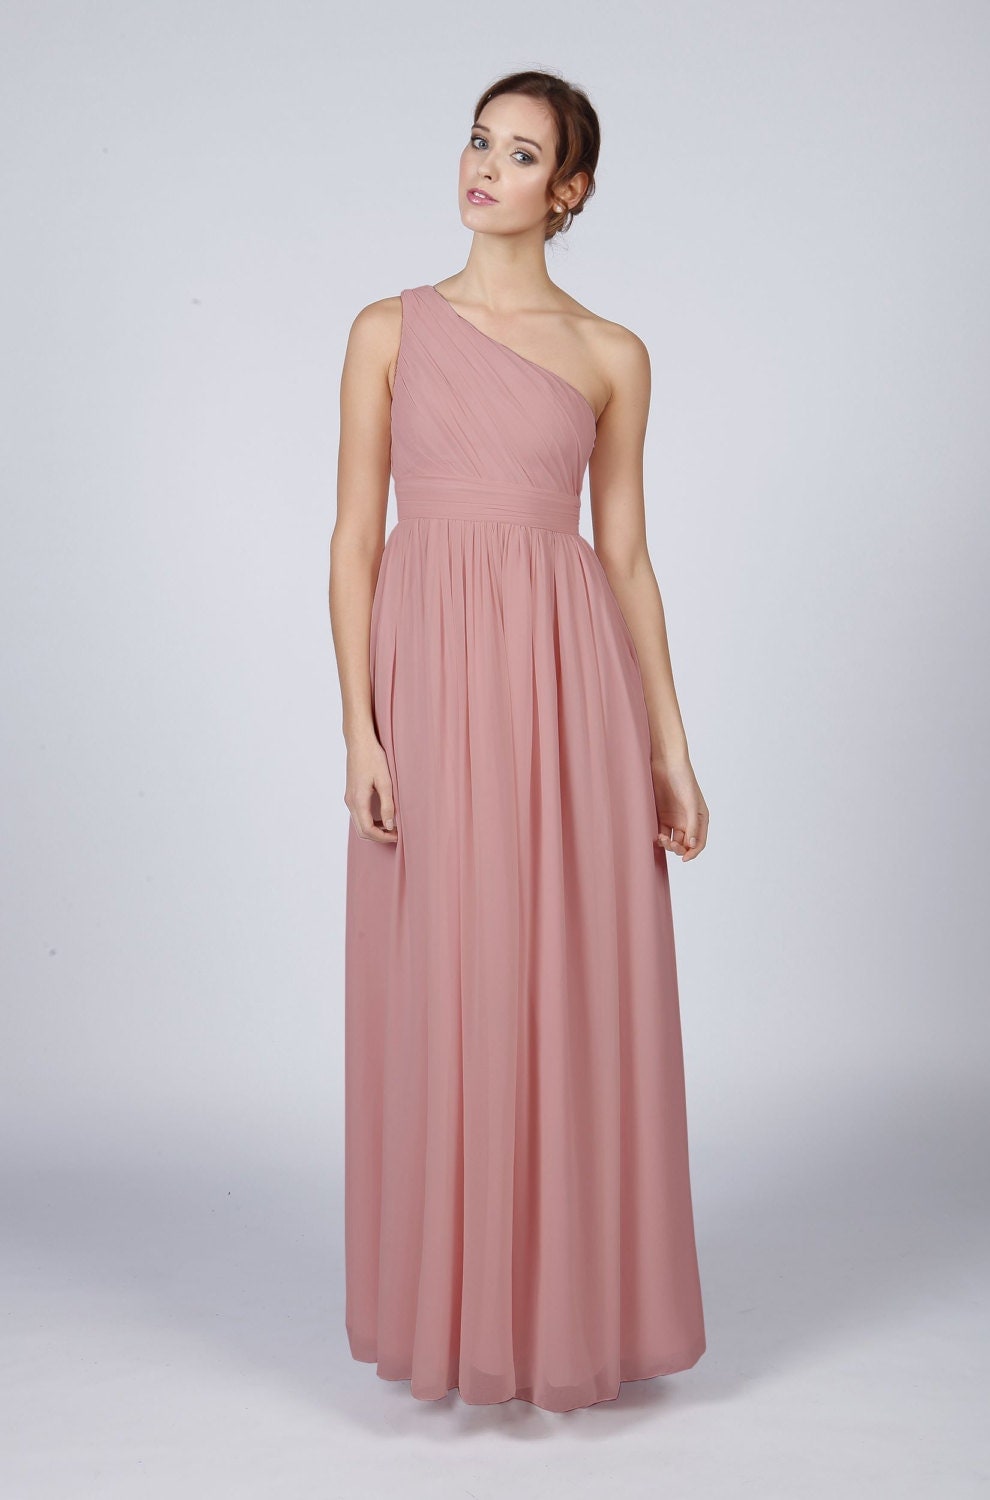 20 Bridesmaid Dress Dusky Pink Great Ideas 7701